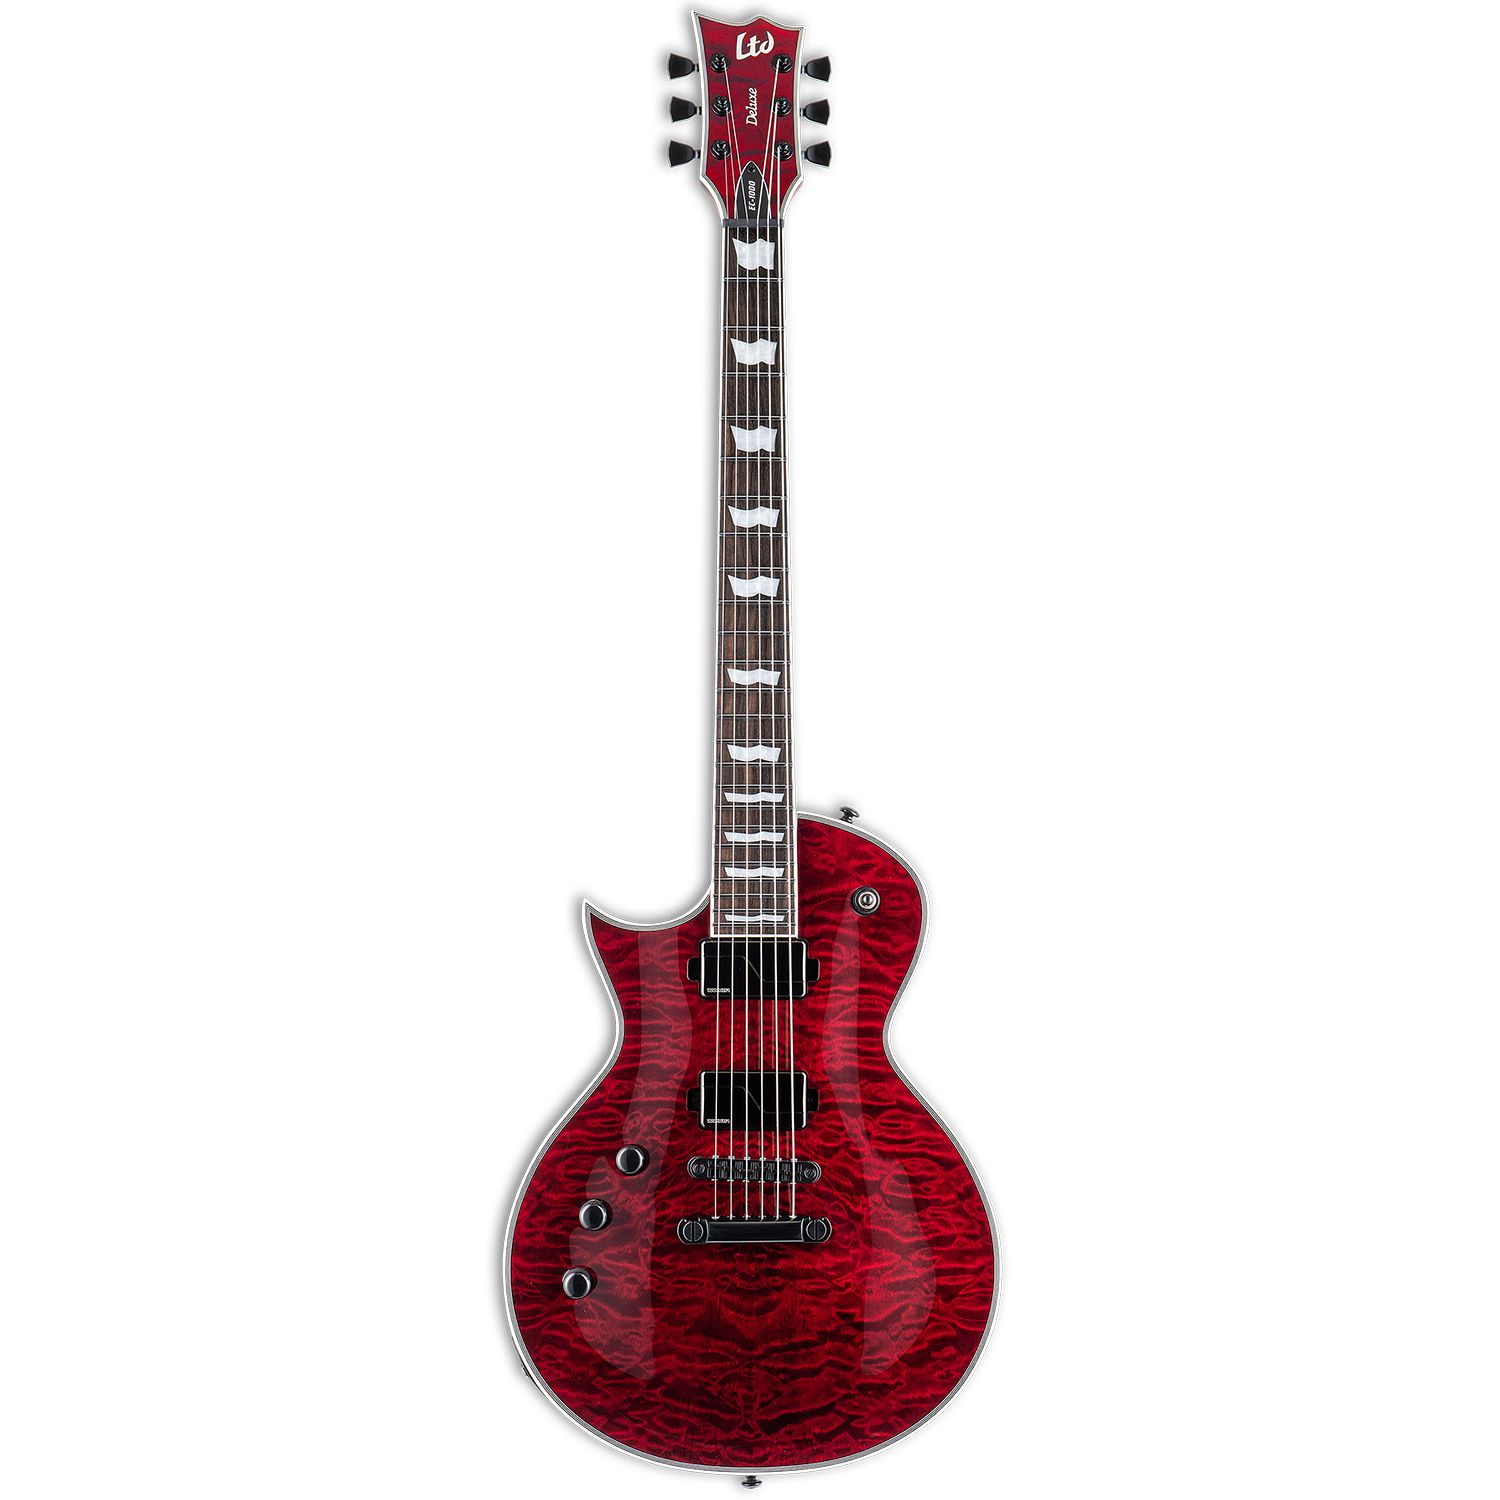 An image of ESP EC-1000 STBC LH Electric Guitar, See-Thru Black Cherry